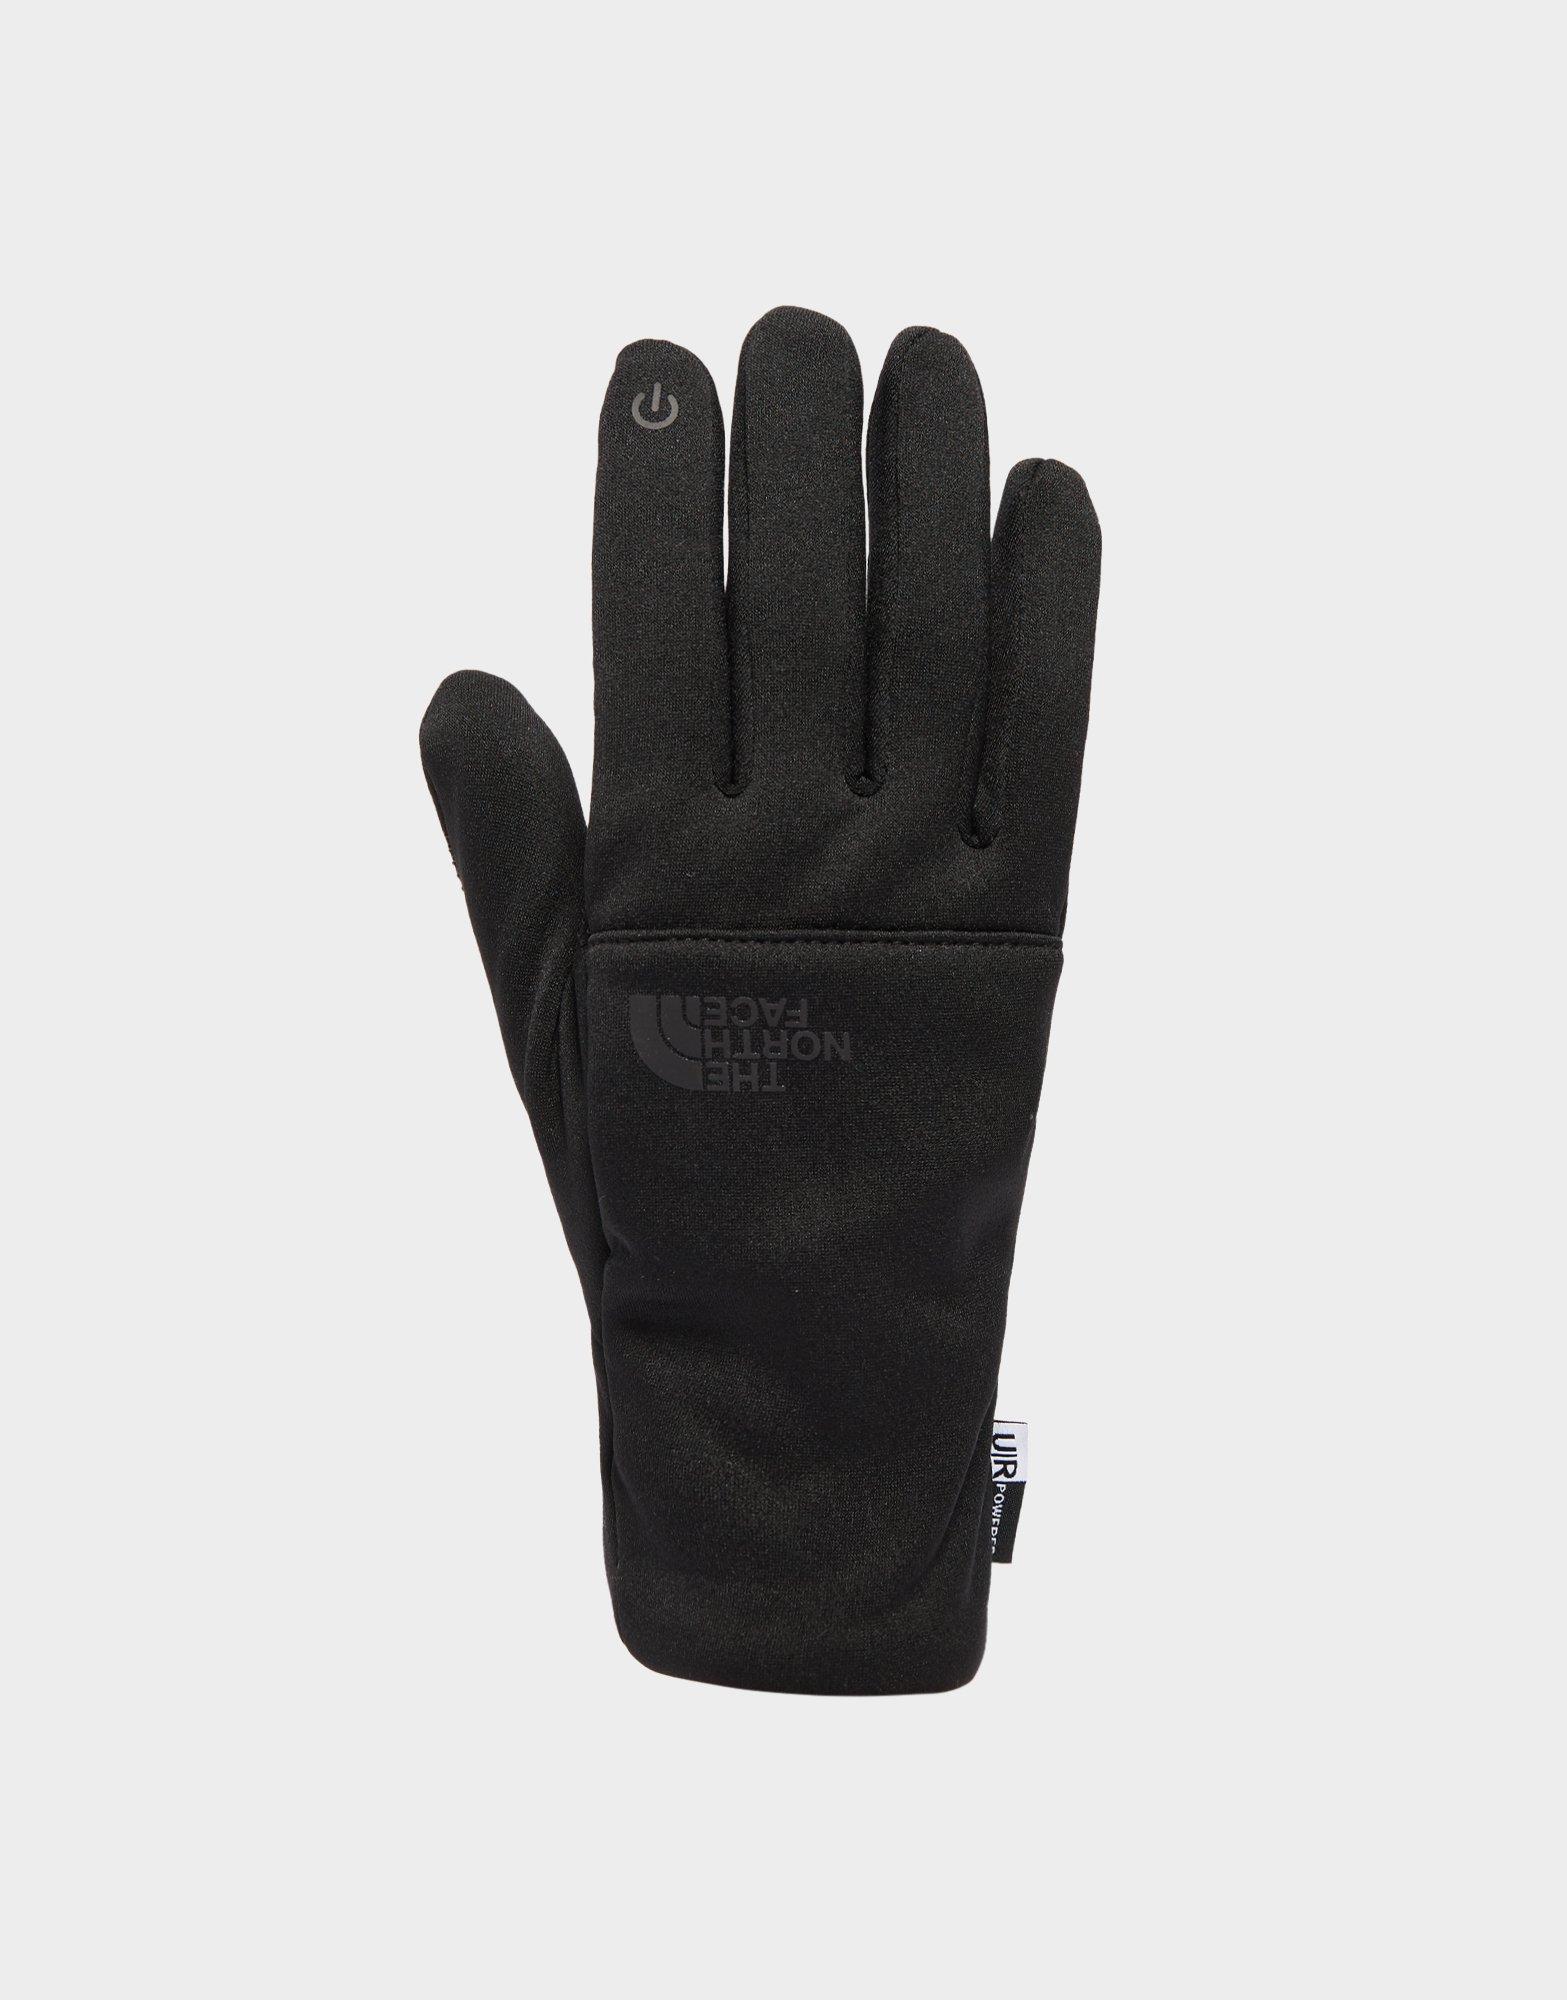 jd north face gloves